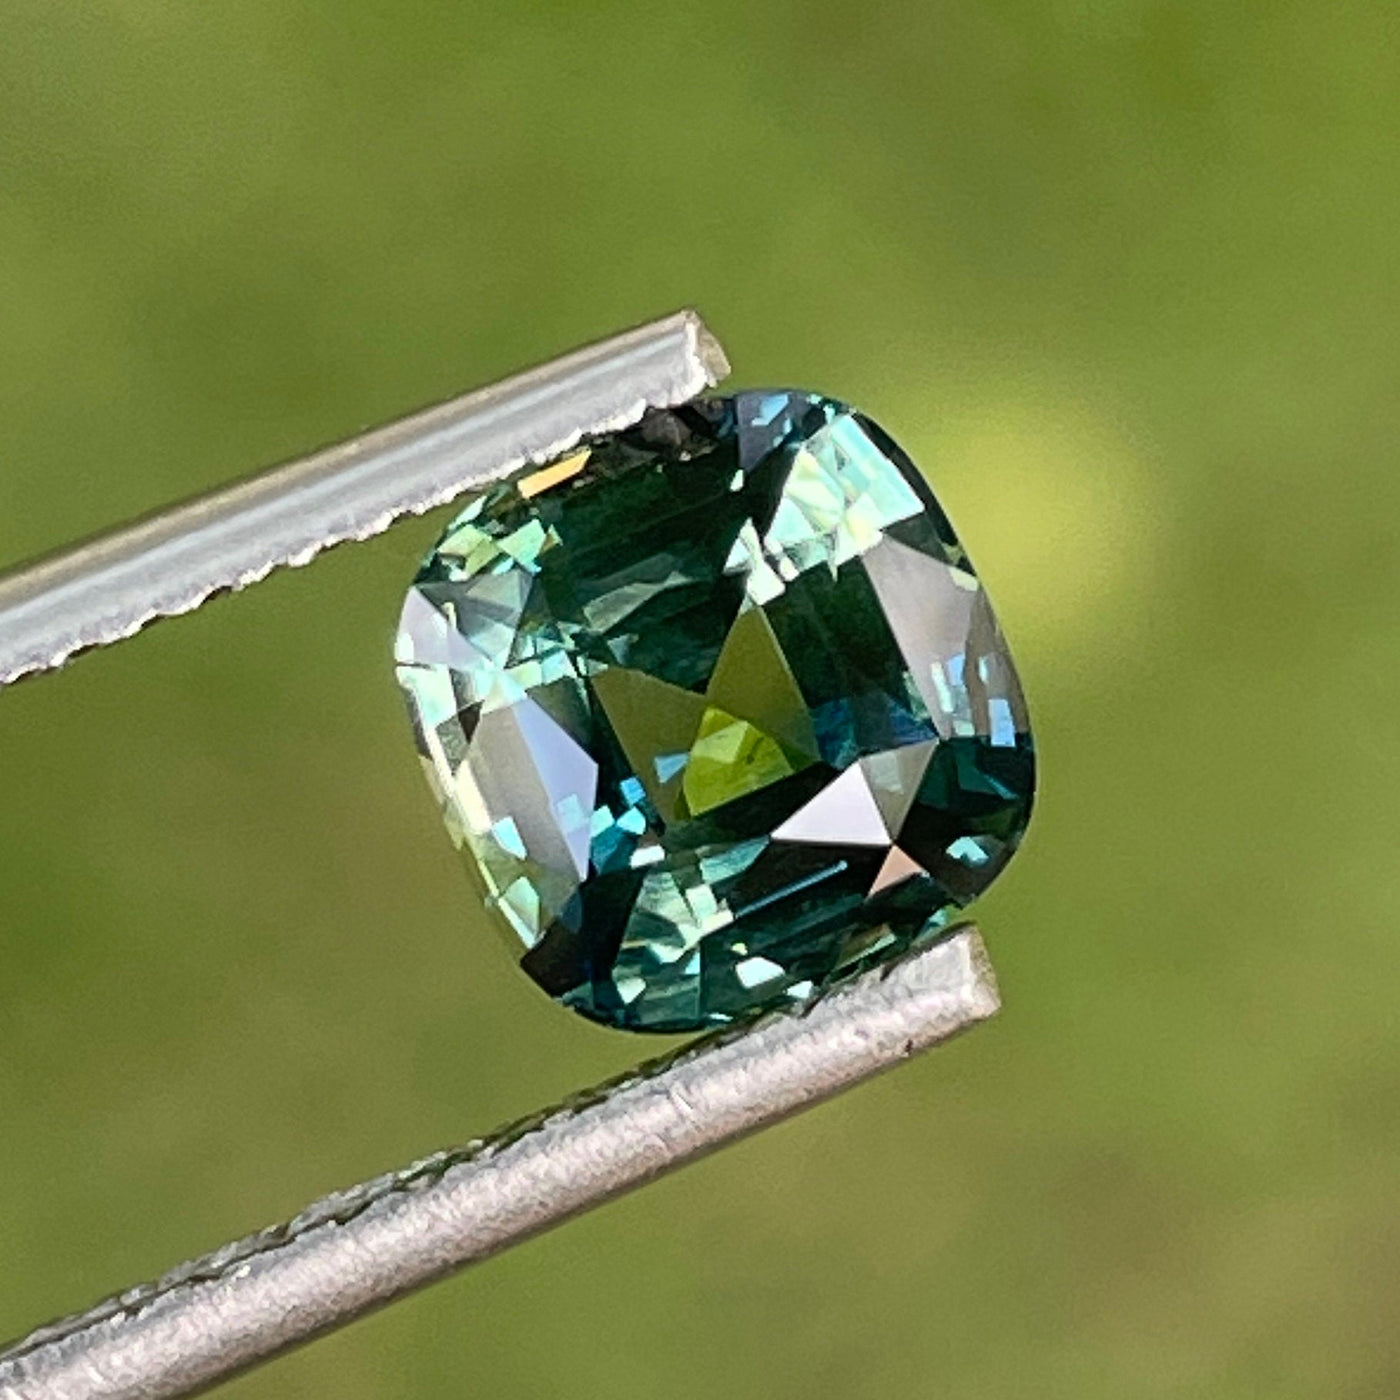 Teal Sapphire l 1.76 Ct l 6.5 x 6.3 x 4.3mm l Cushion l Madagascar l Bespoke Natural Sapphire For  Engagement Ring